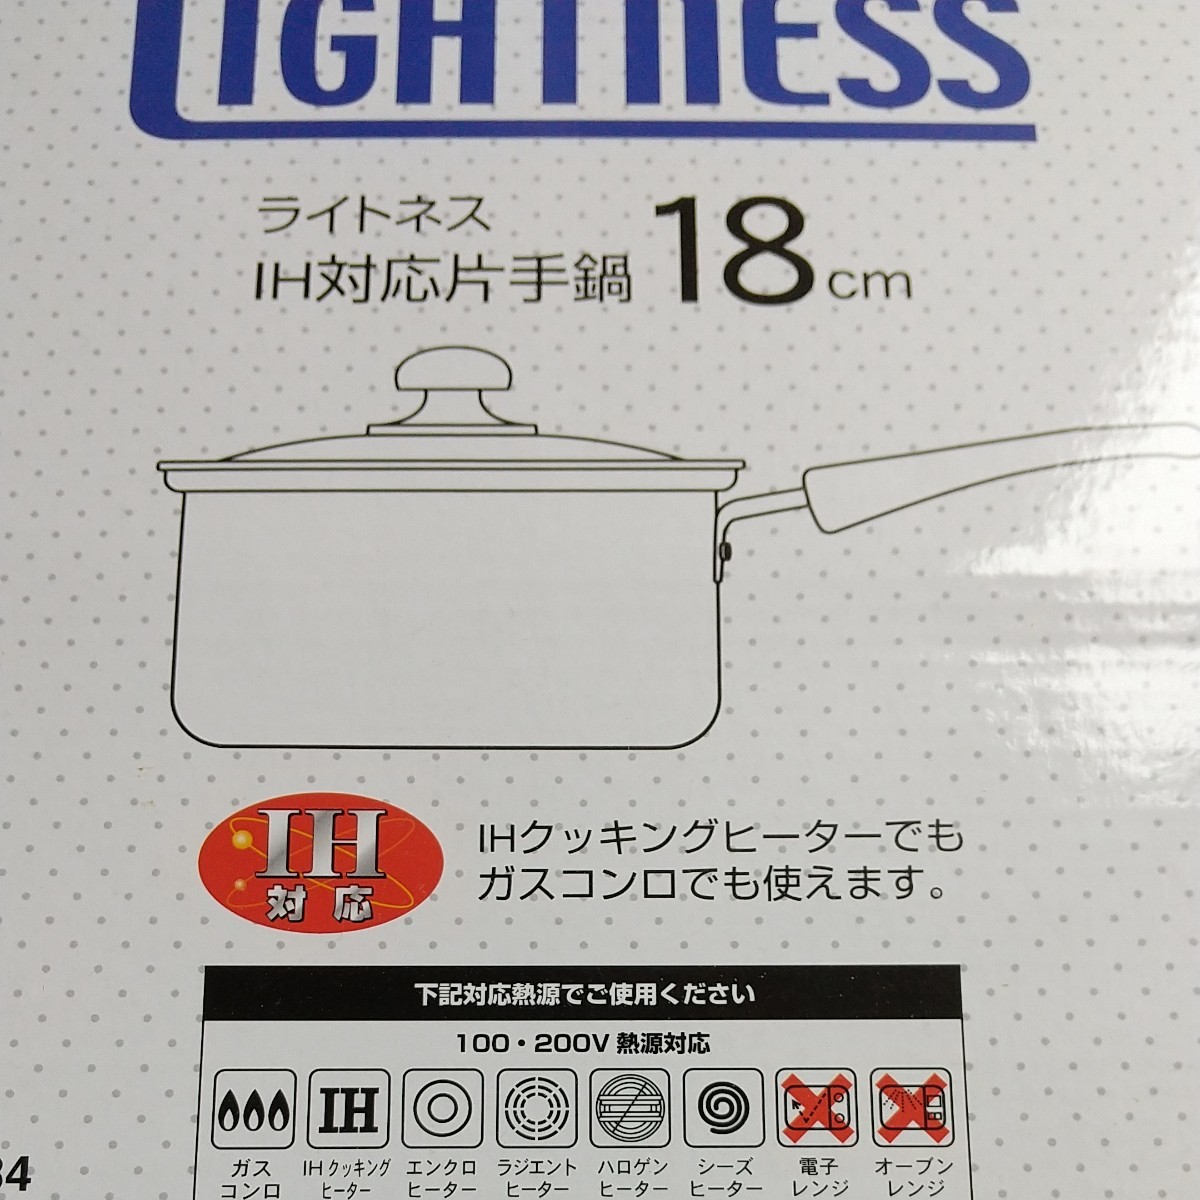 IH対応 ステンレス製 ライトネス 片手鍋 18cm